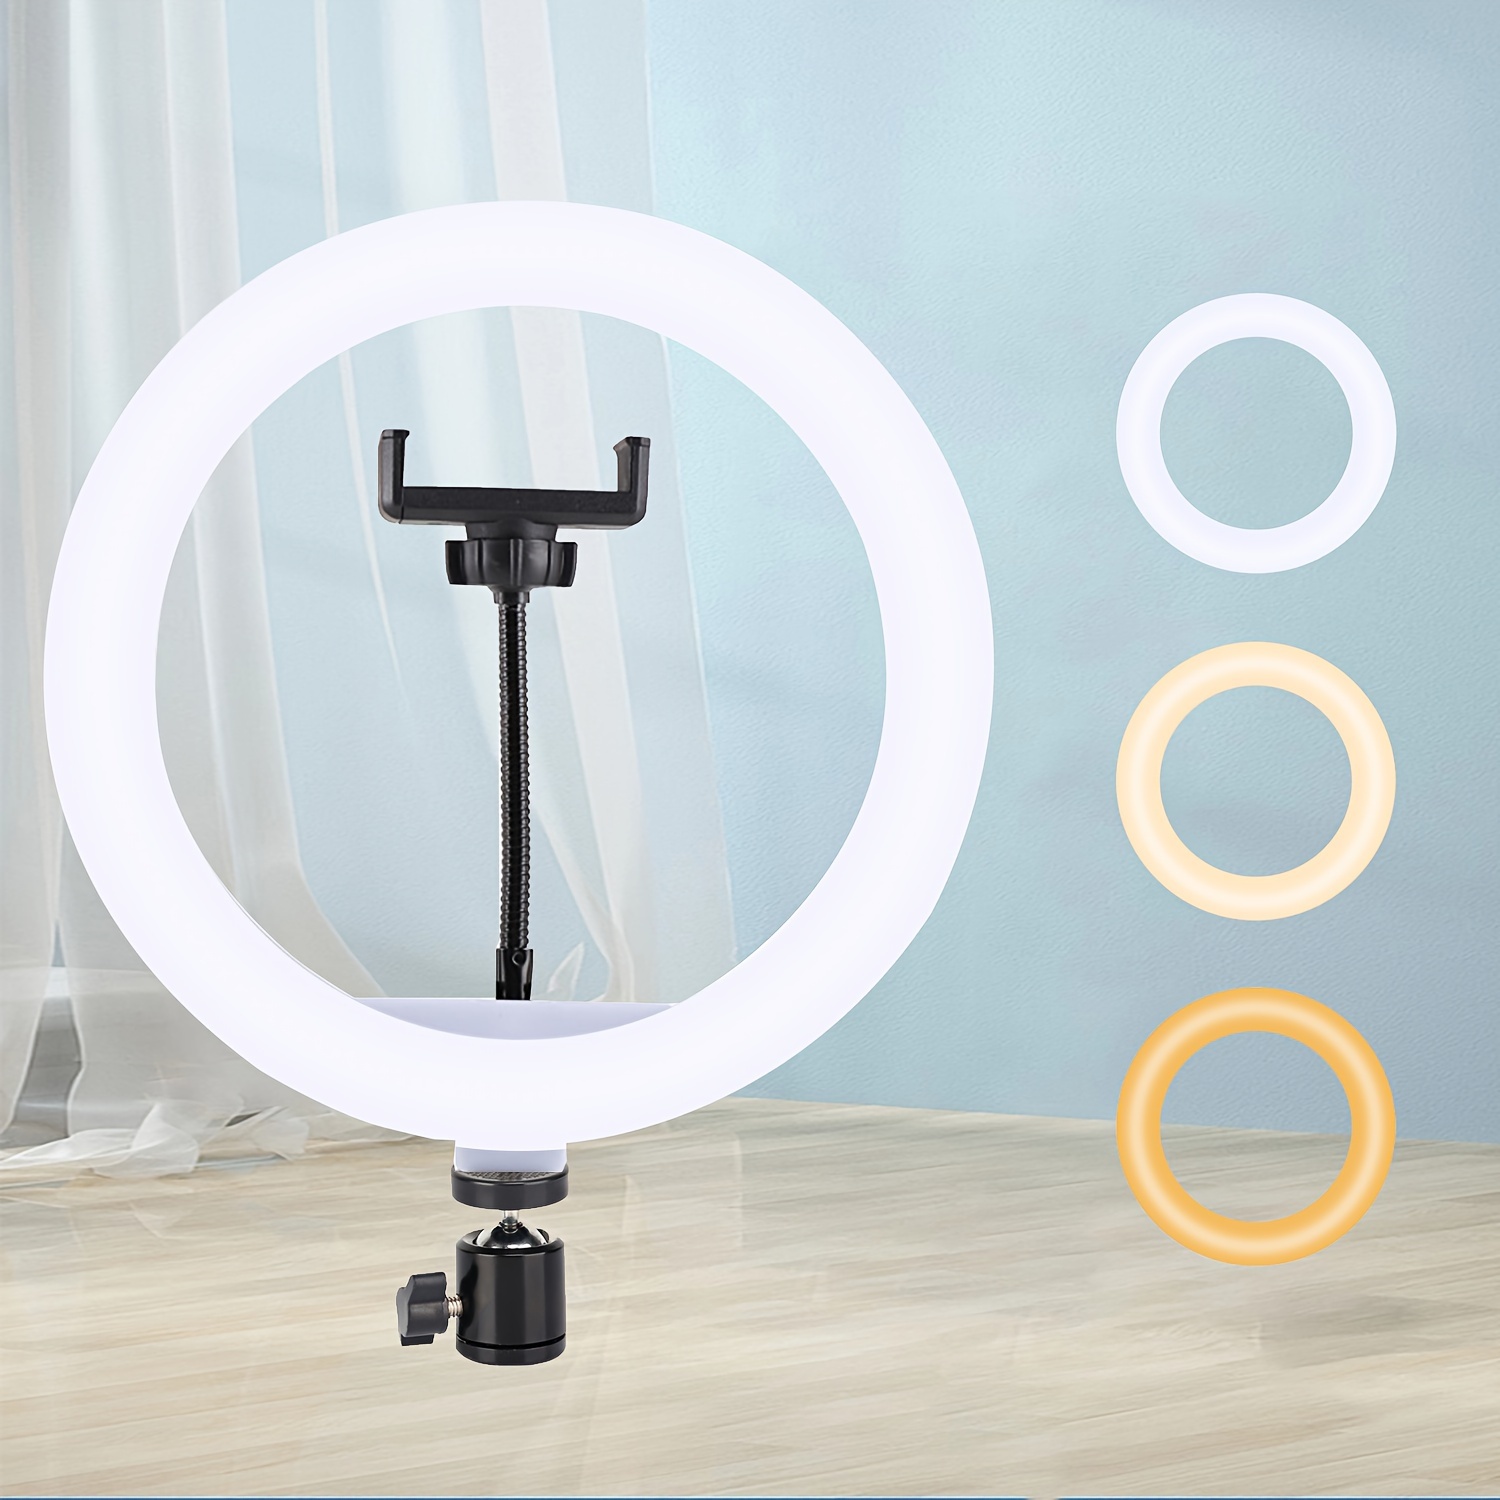 Anillo de luz para selfie de 10 pulgadas con trípode de 63 pulgadas y  soporte para teléfono para transmisión en vivo/maquillaje, anillo de luz  LED